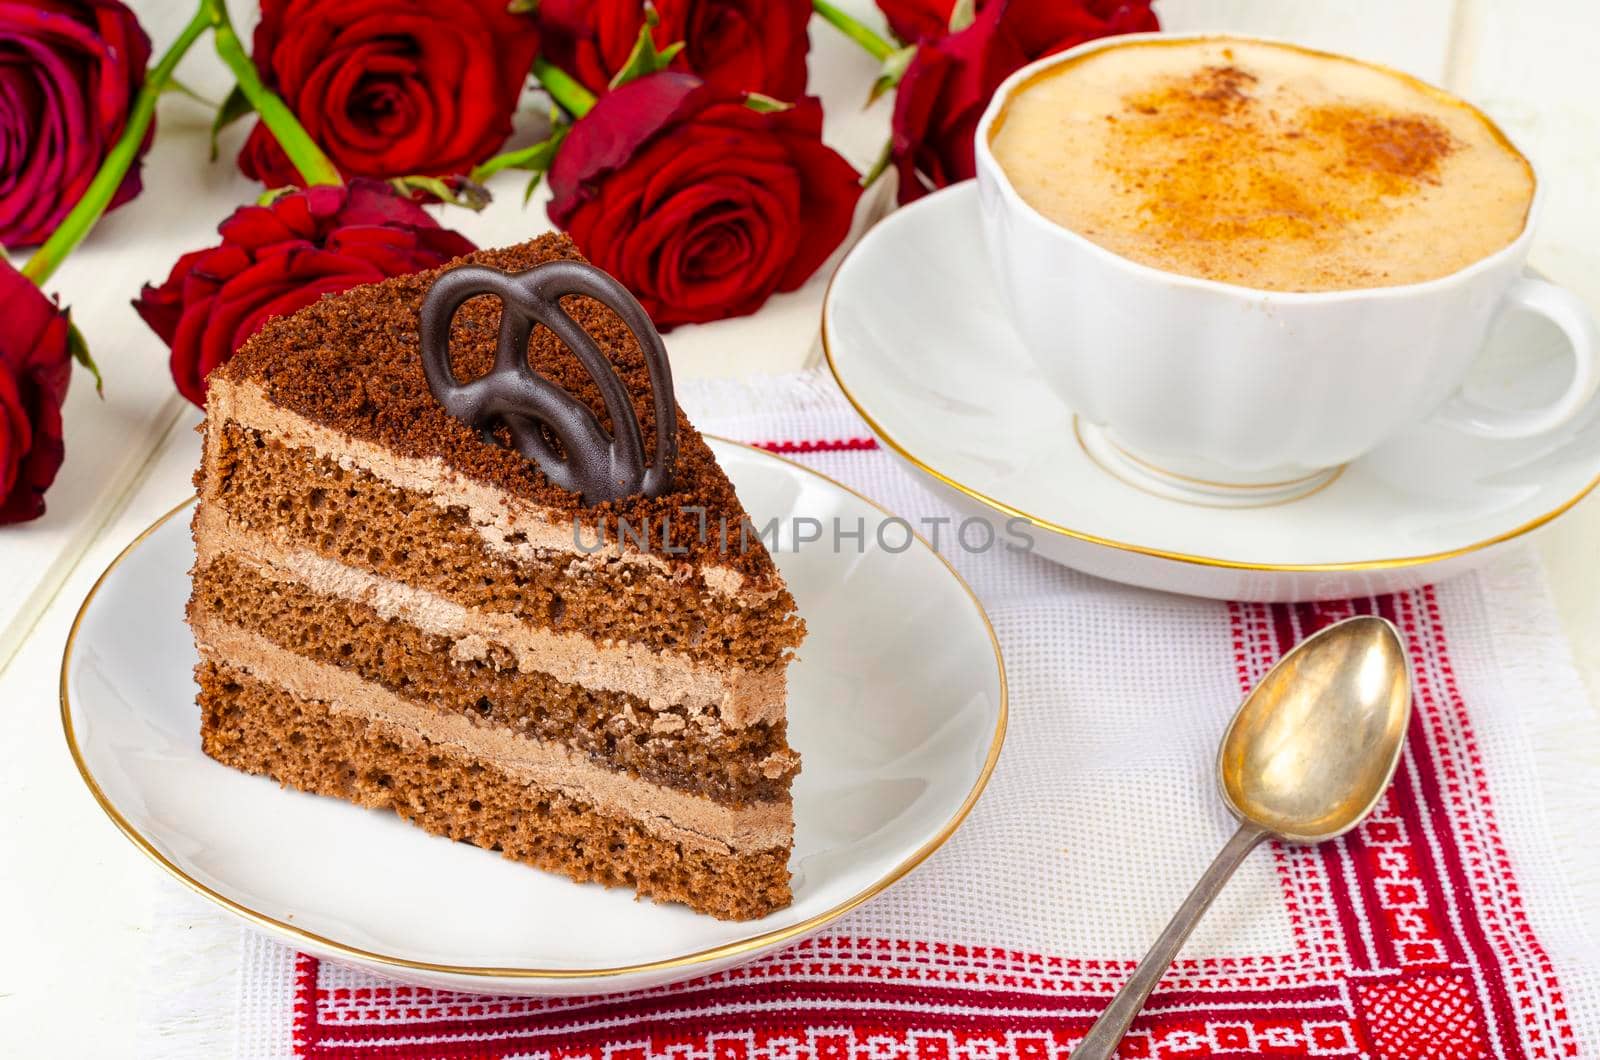 Piece of chocolate cake, cappuccino, flowers on table. Studio Photo